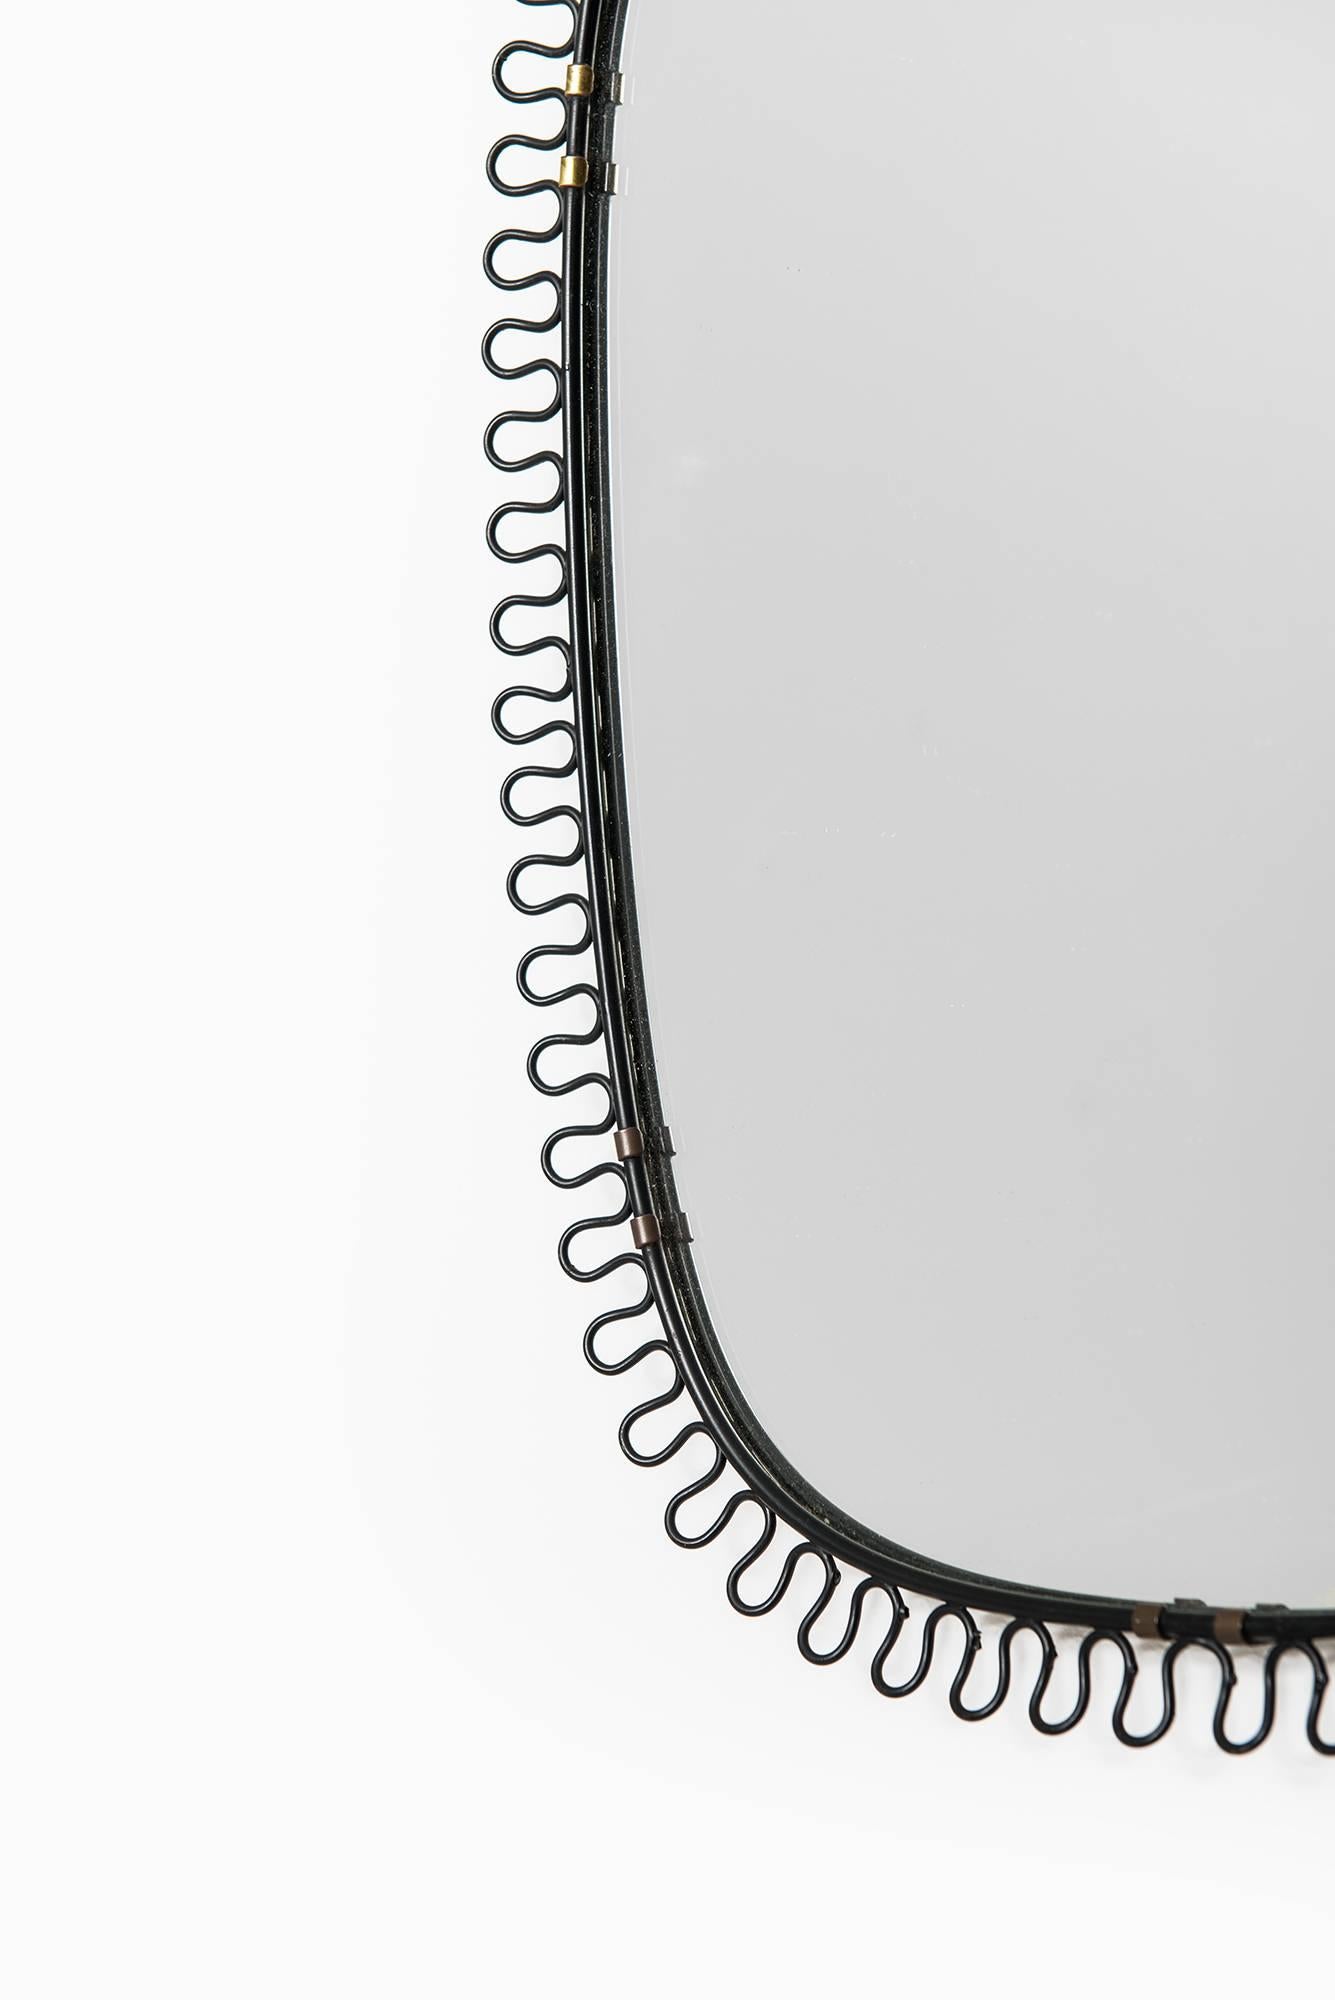 Scandinavian Modern Mirror Designed by Josef Frank Produced by Svenskt Tenn in Sweden